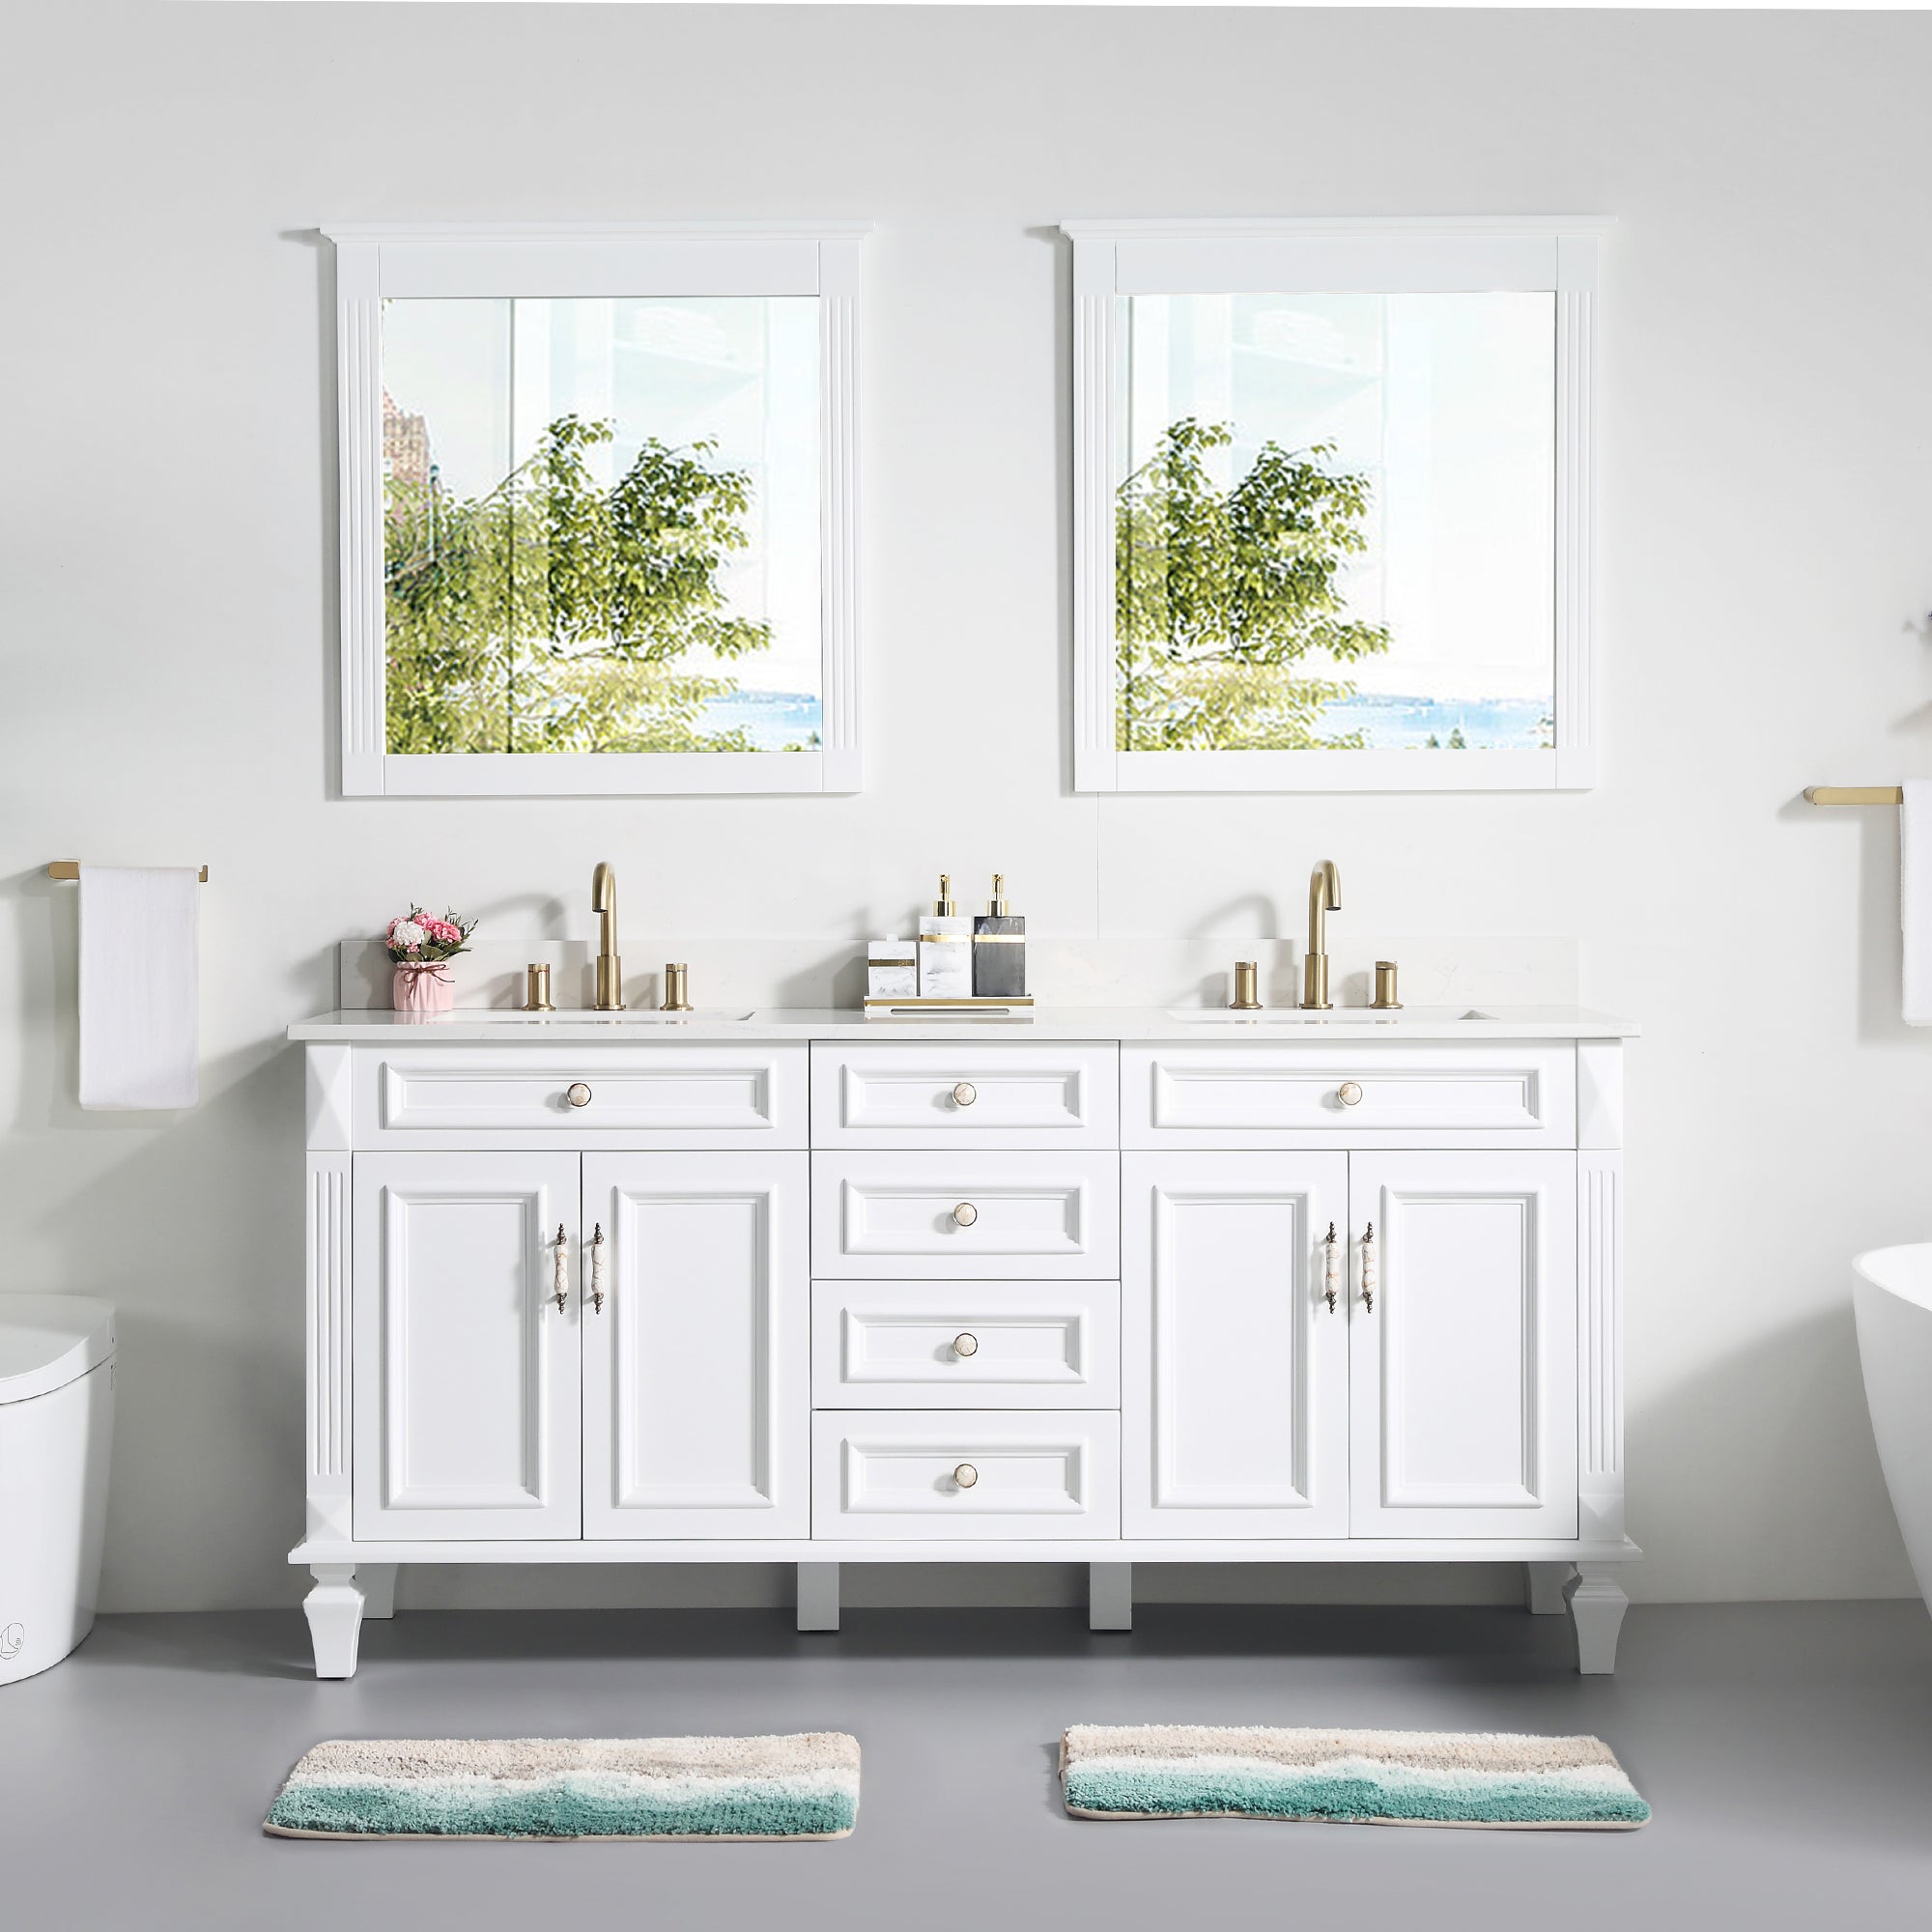 72 in. White Single Sink Freestanding Solid Wood Bathroom Vanity Storage Organizer with Carrara White Quartz Countertop